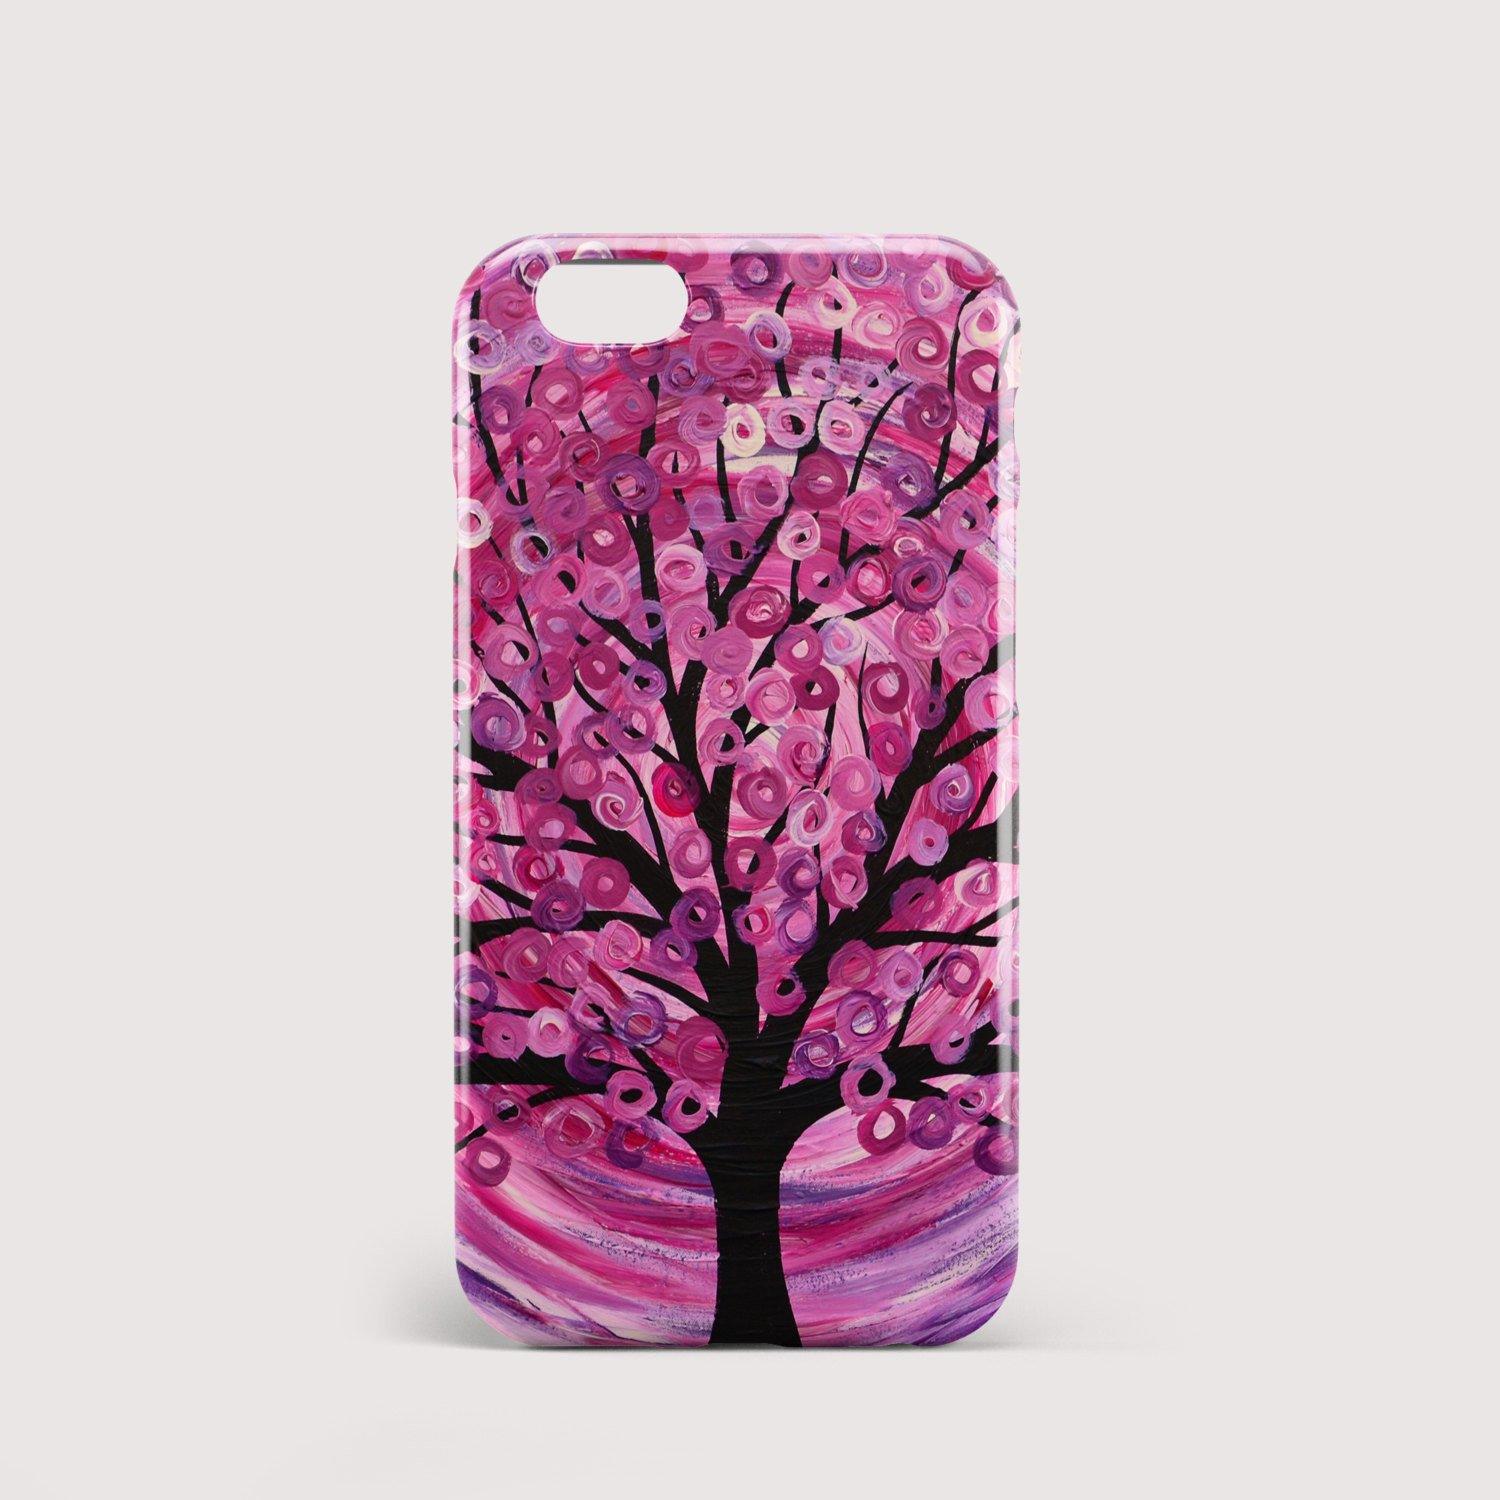 Raspberry Ripple Tree iPhone Case